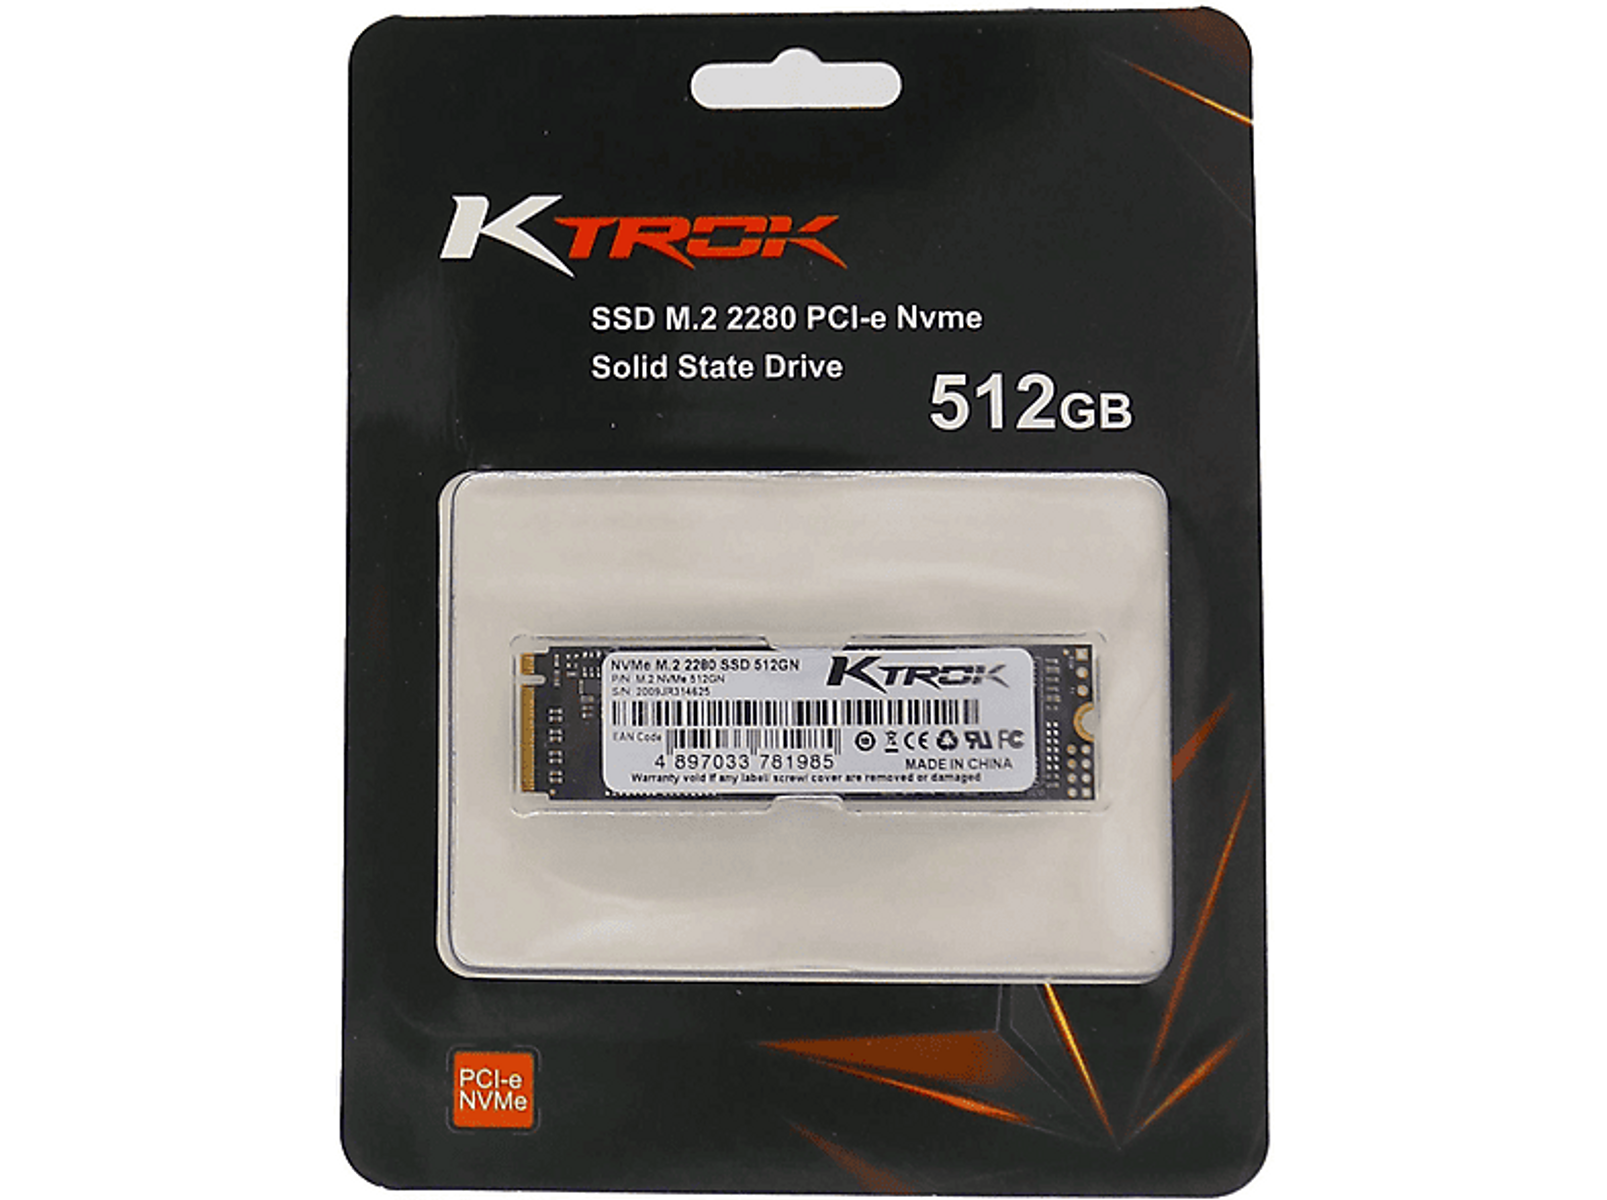 GB, 512 SSD, & A ME300-512GN, FOX intern